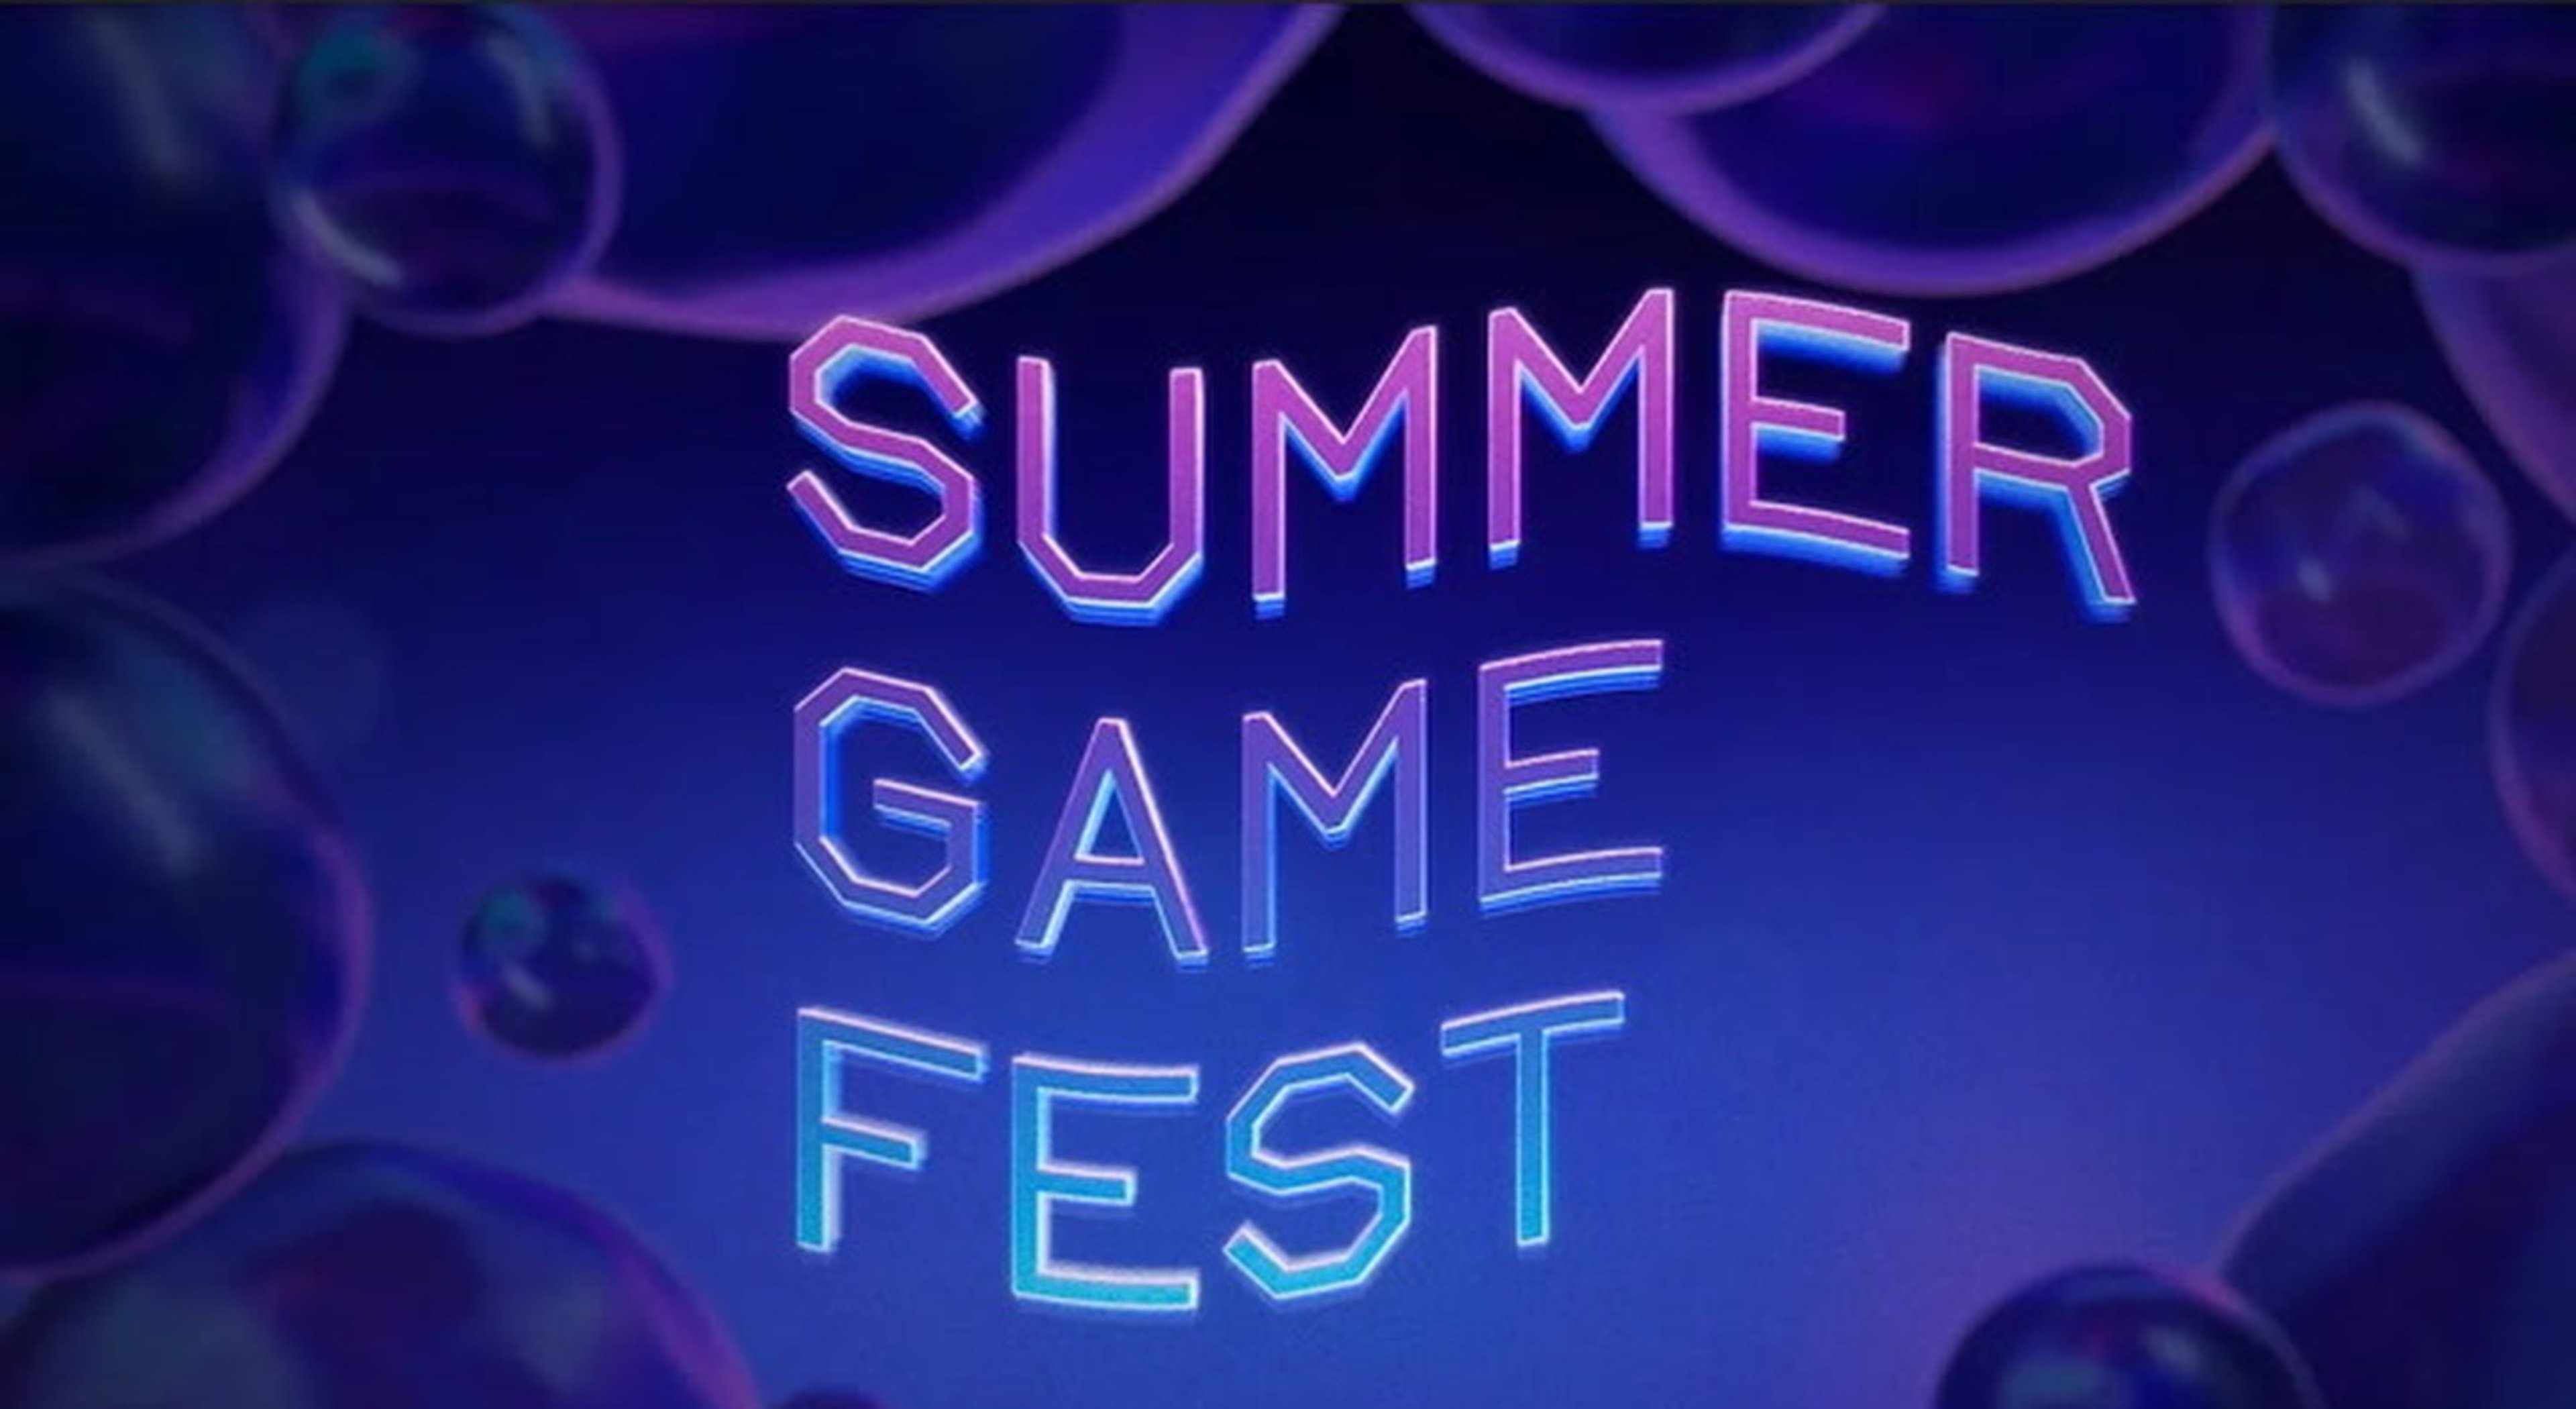 Summer Game Event - Summer Game Fest